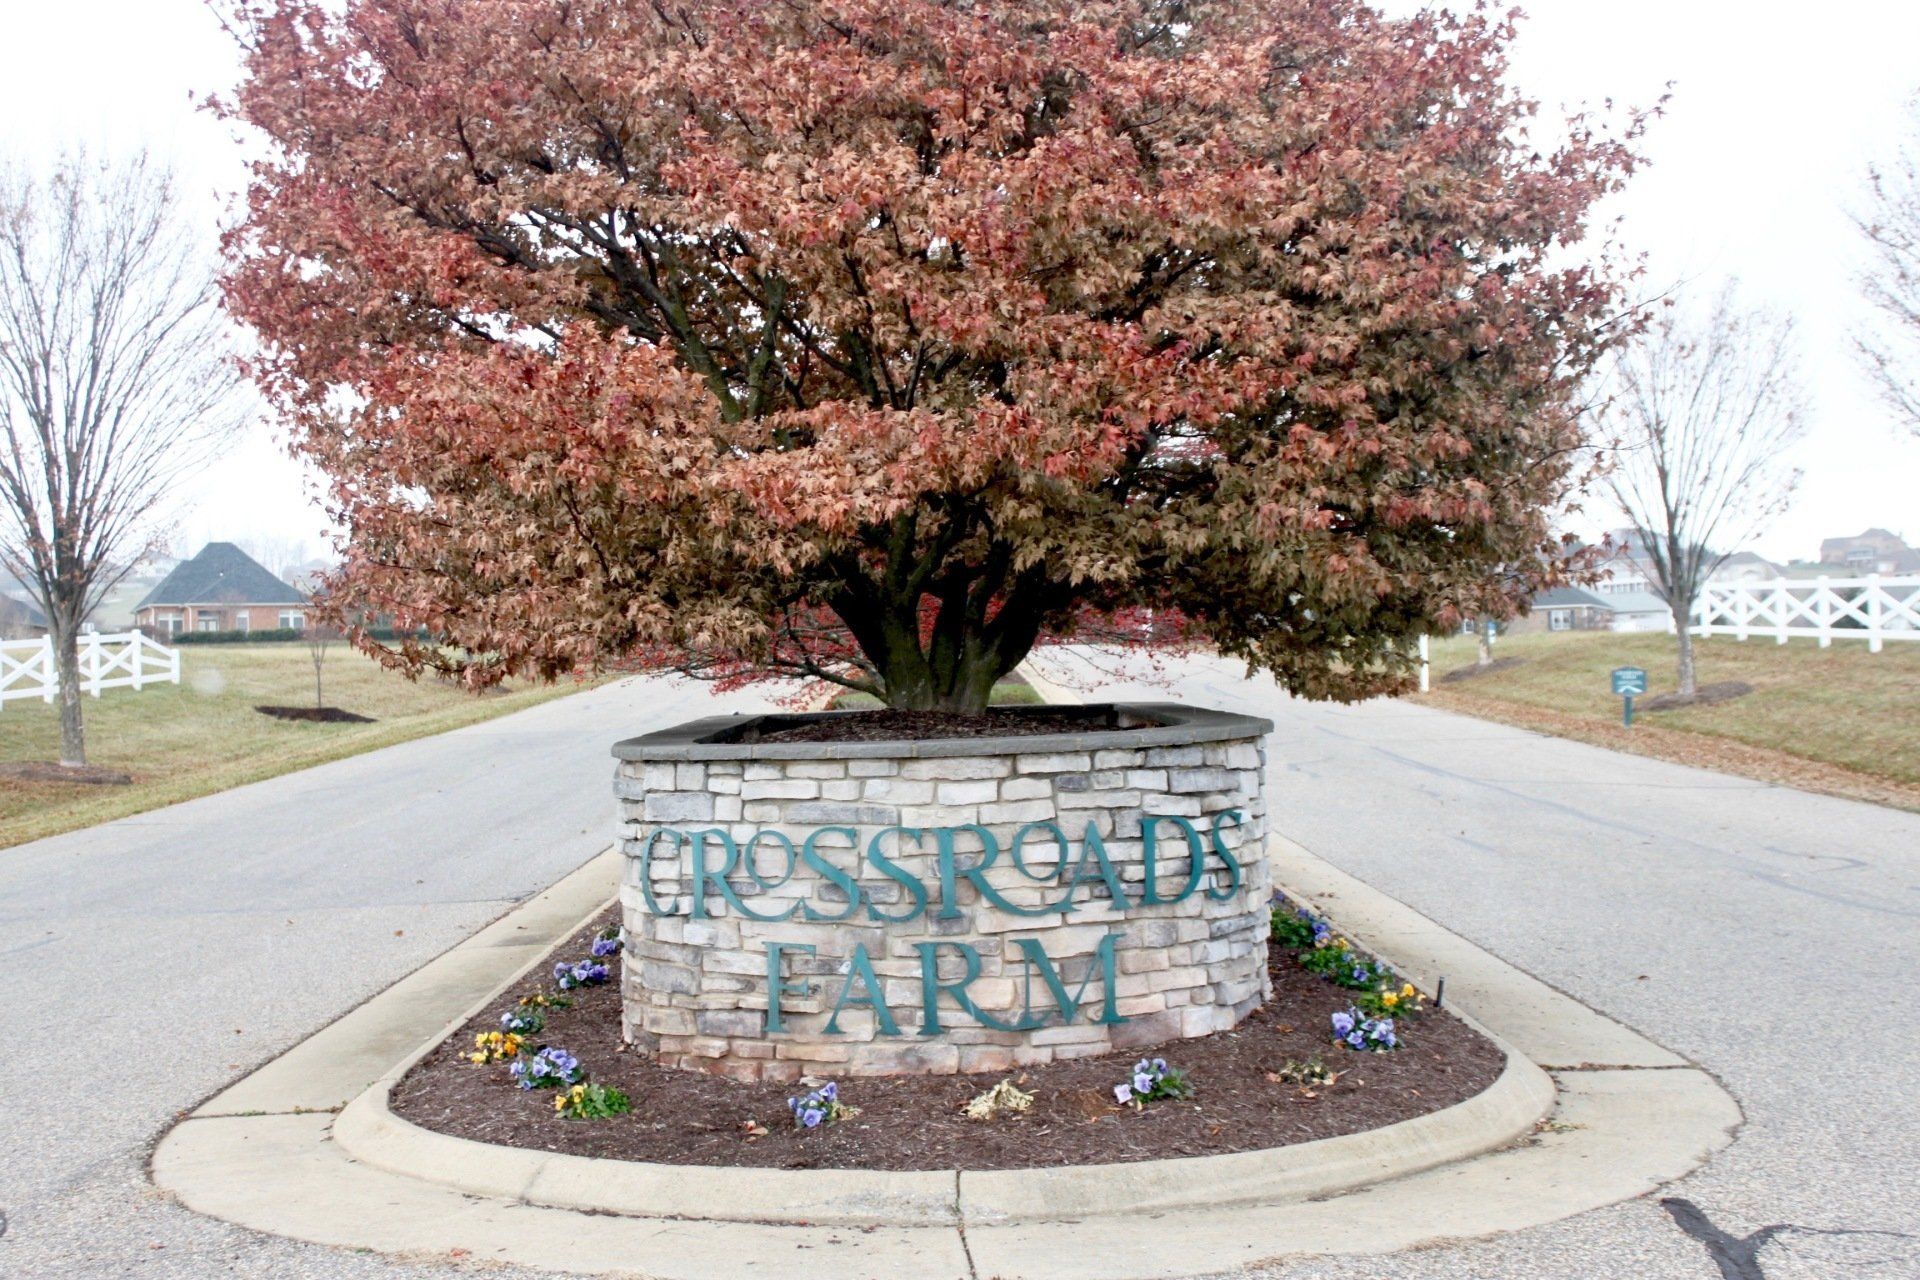 Crossroads Farm property images